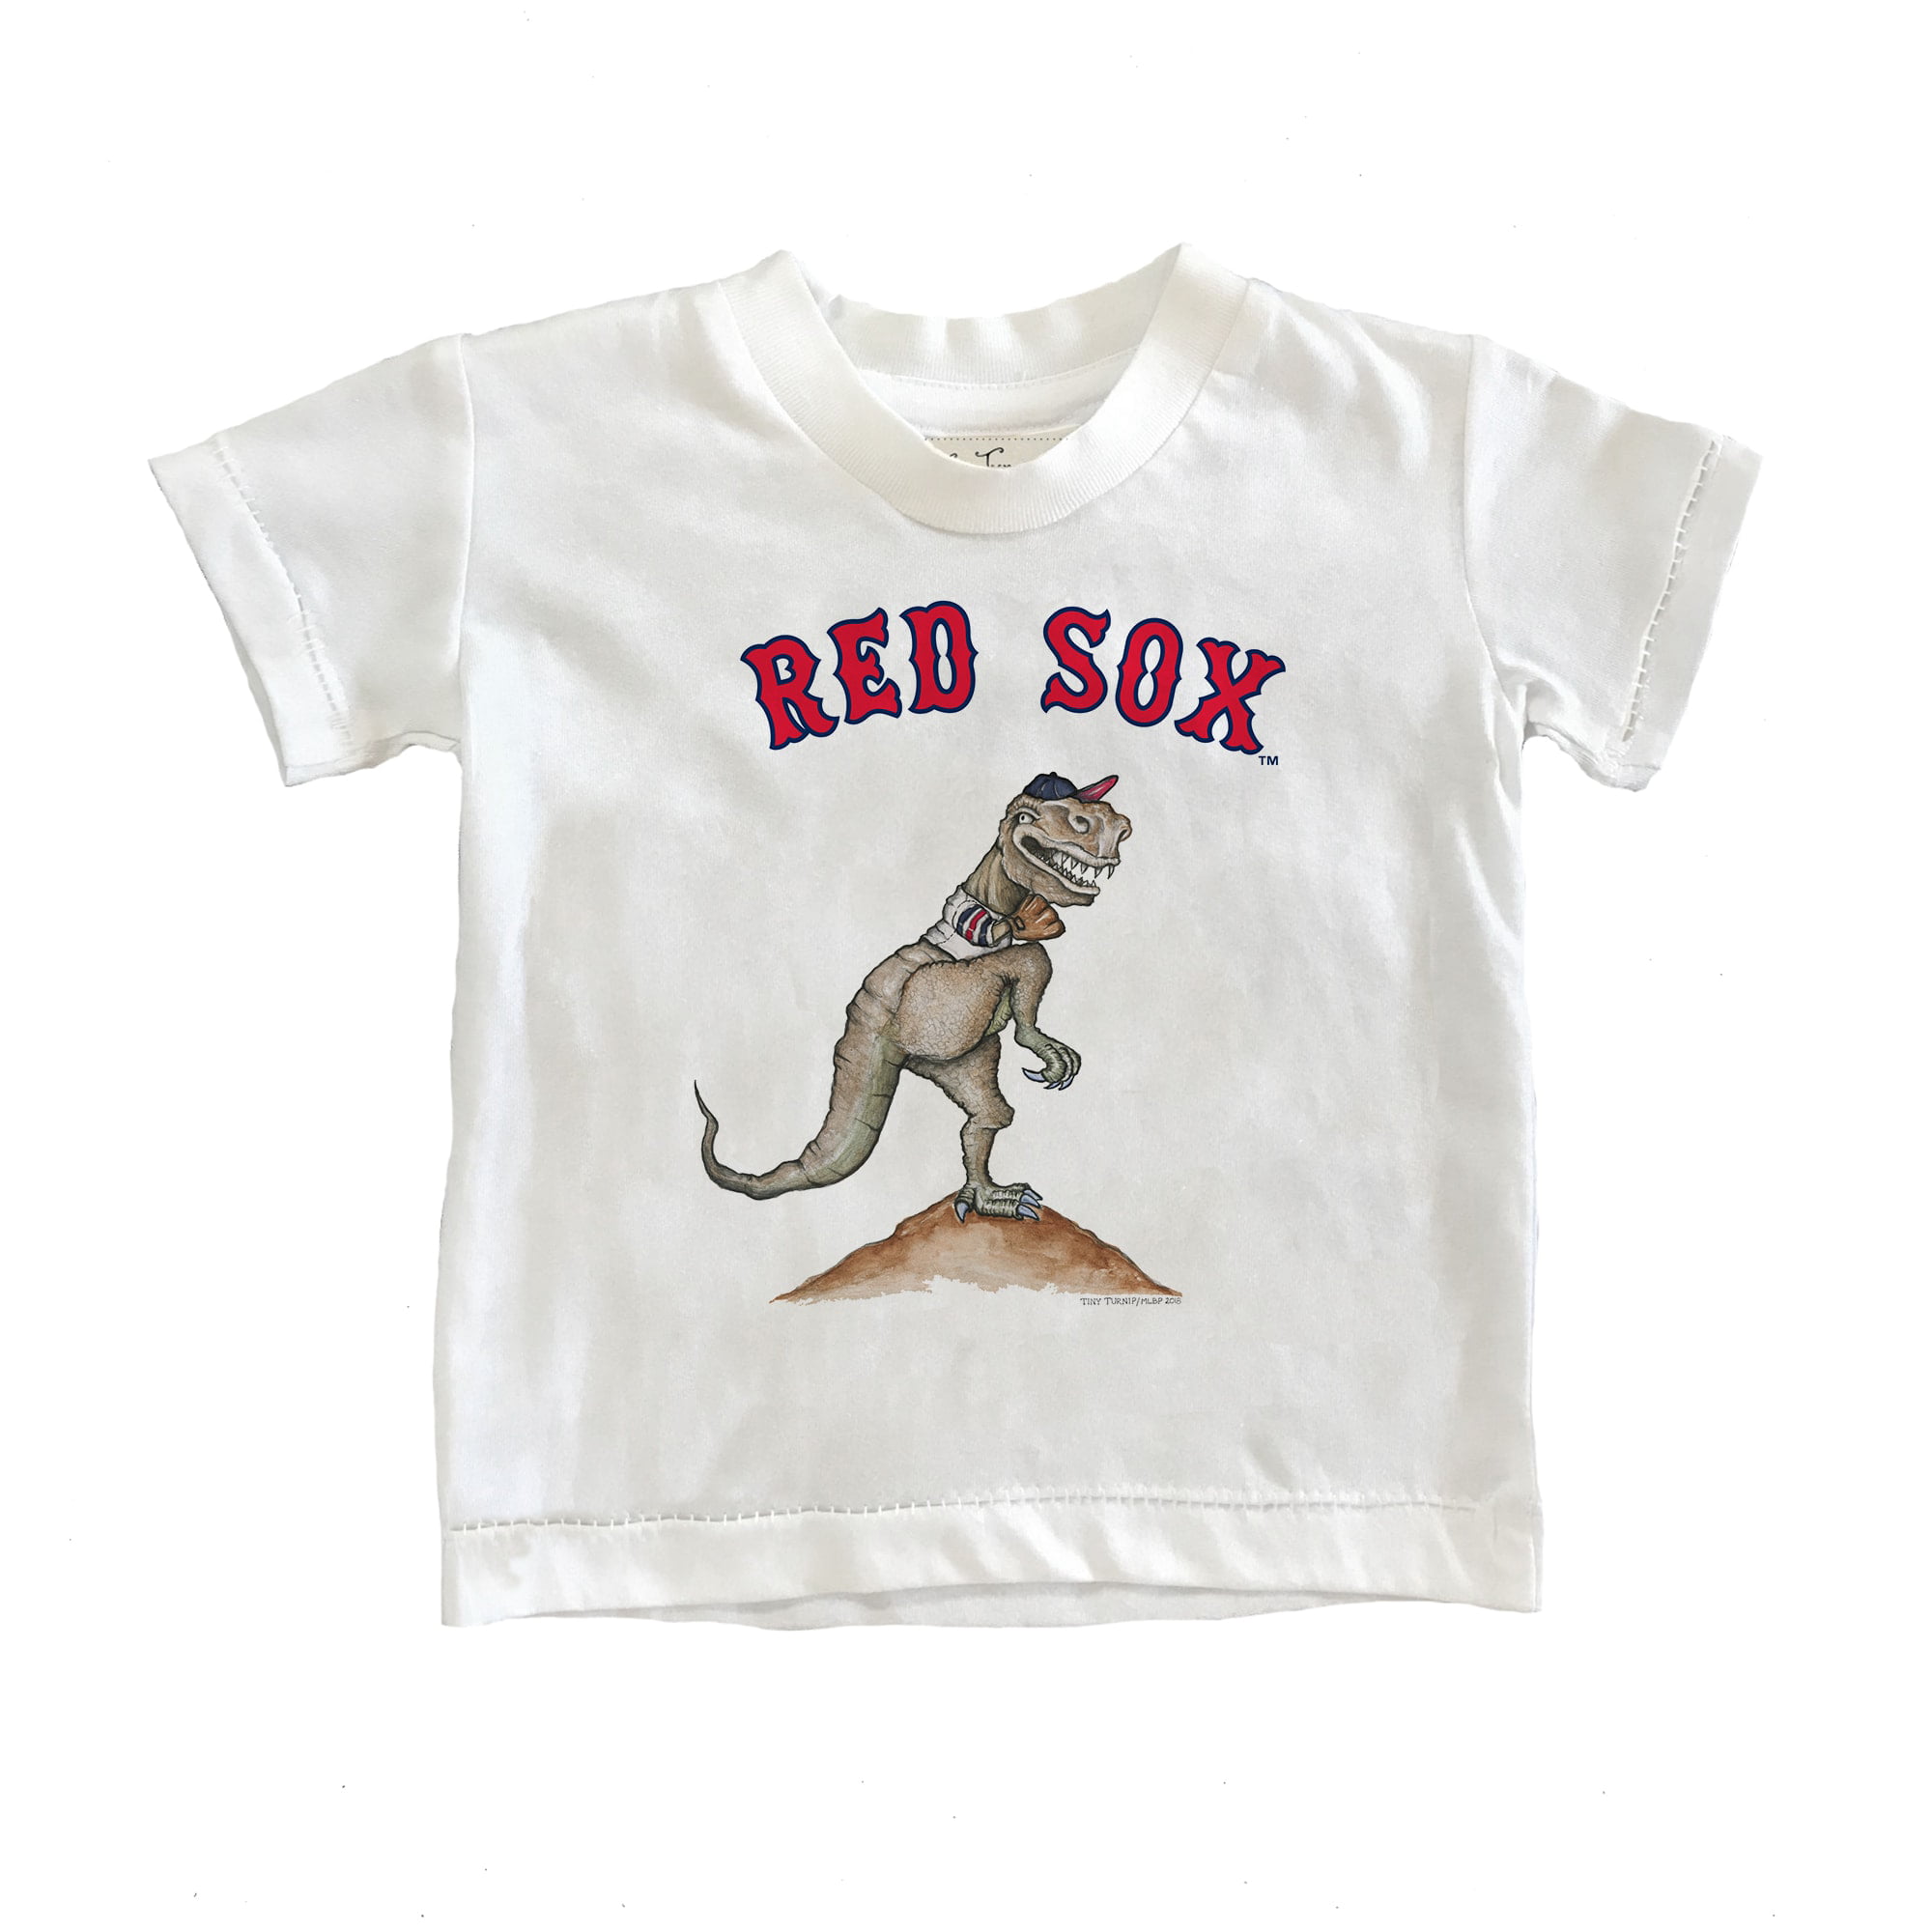 boston red sox shirt youth